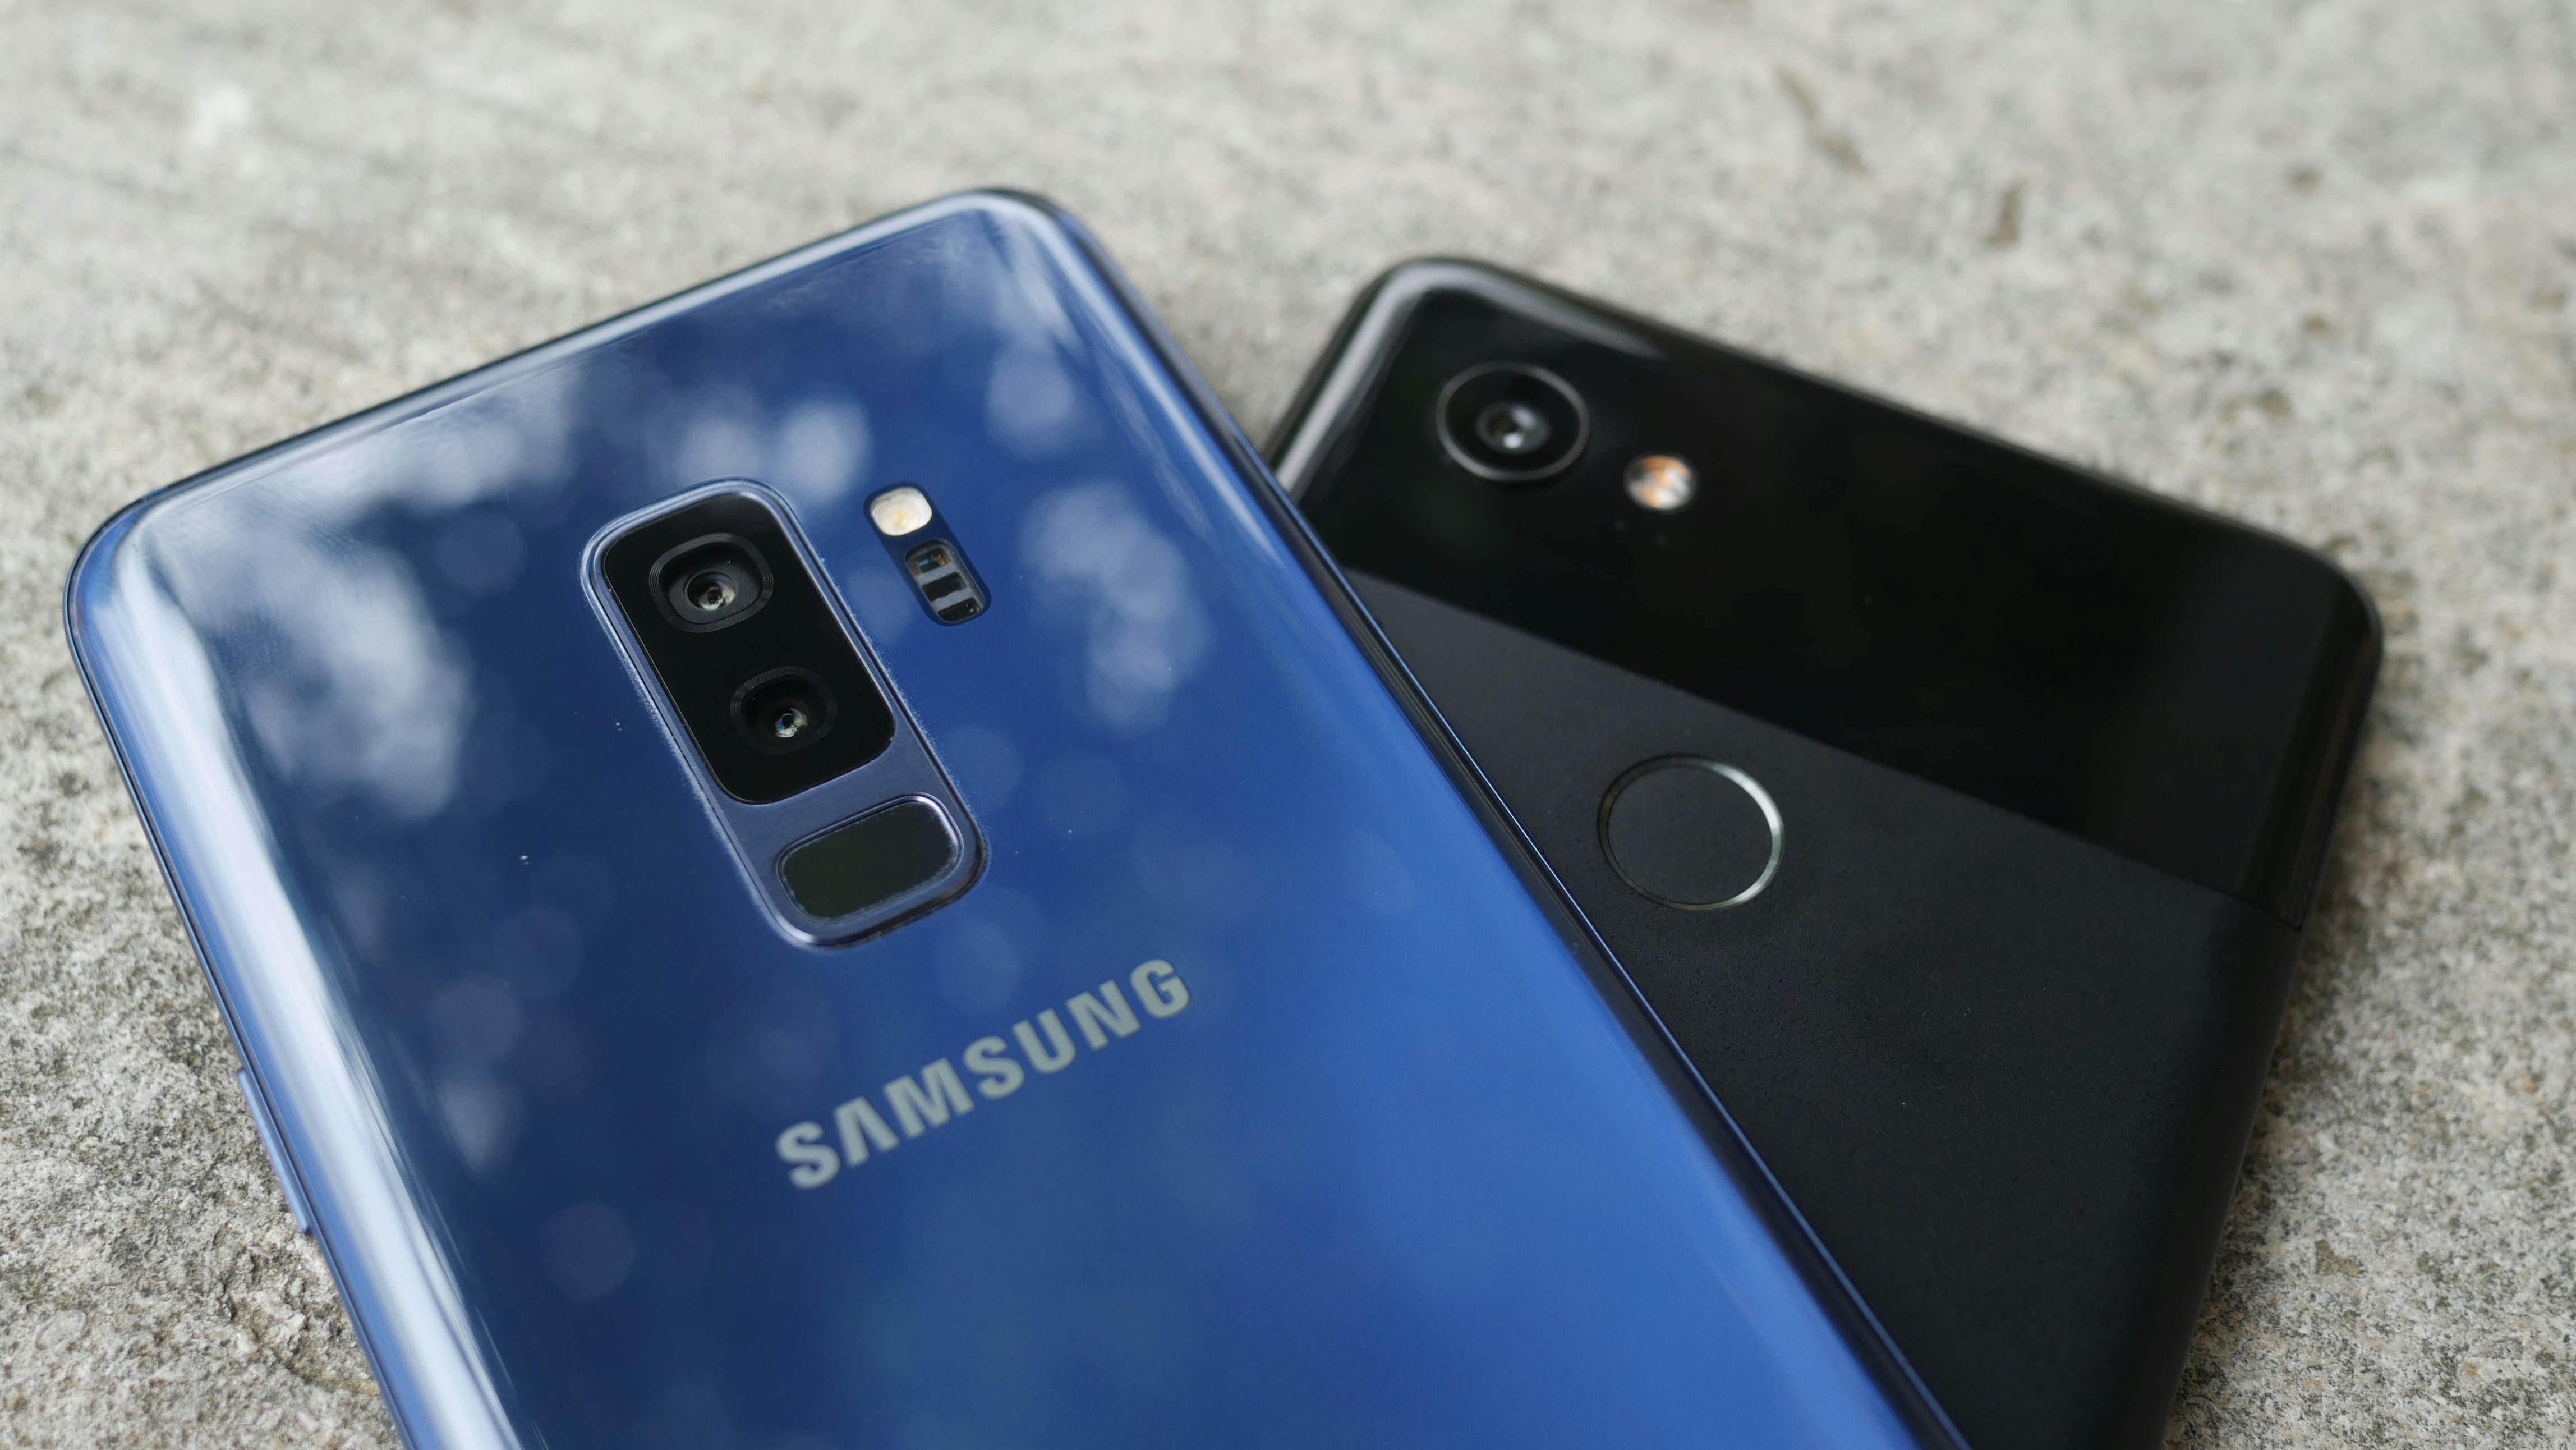 samsung galaxy s9+ vs pixel 2 xl smartphones